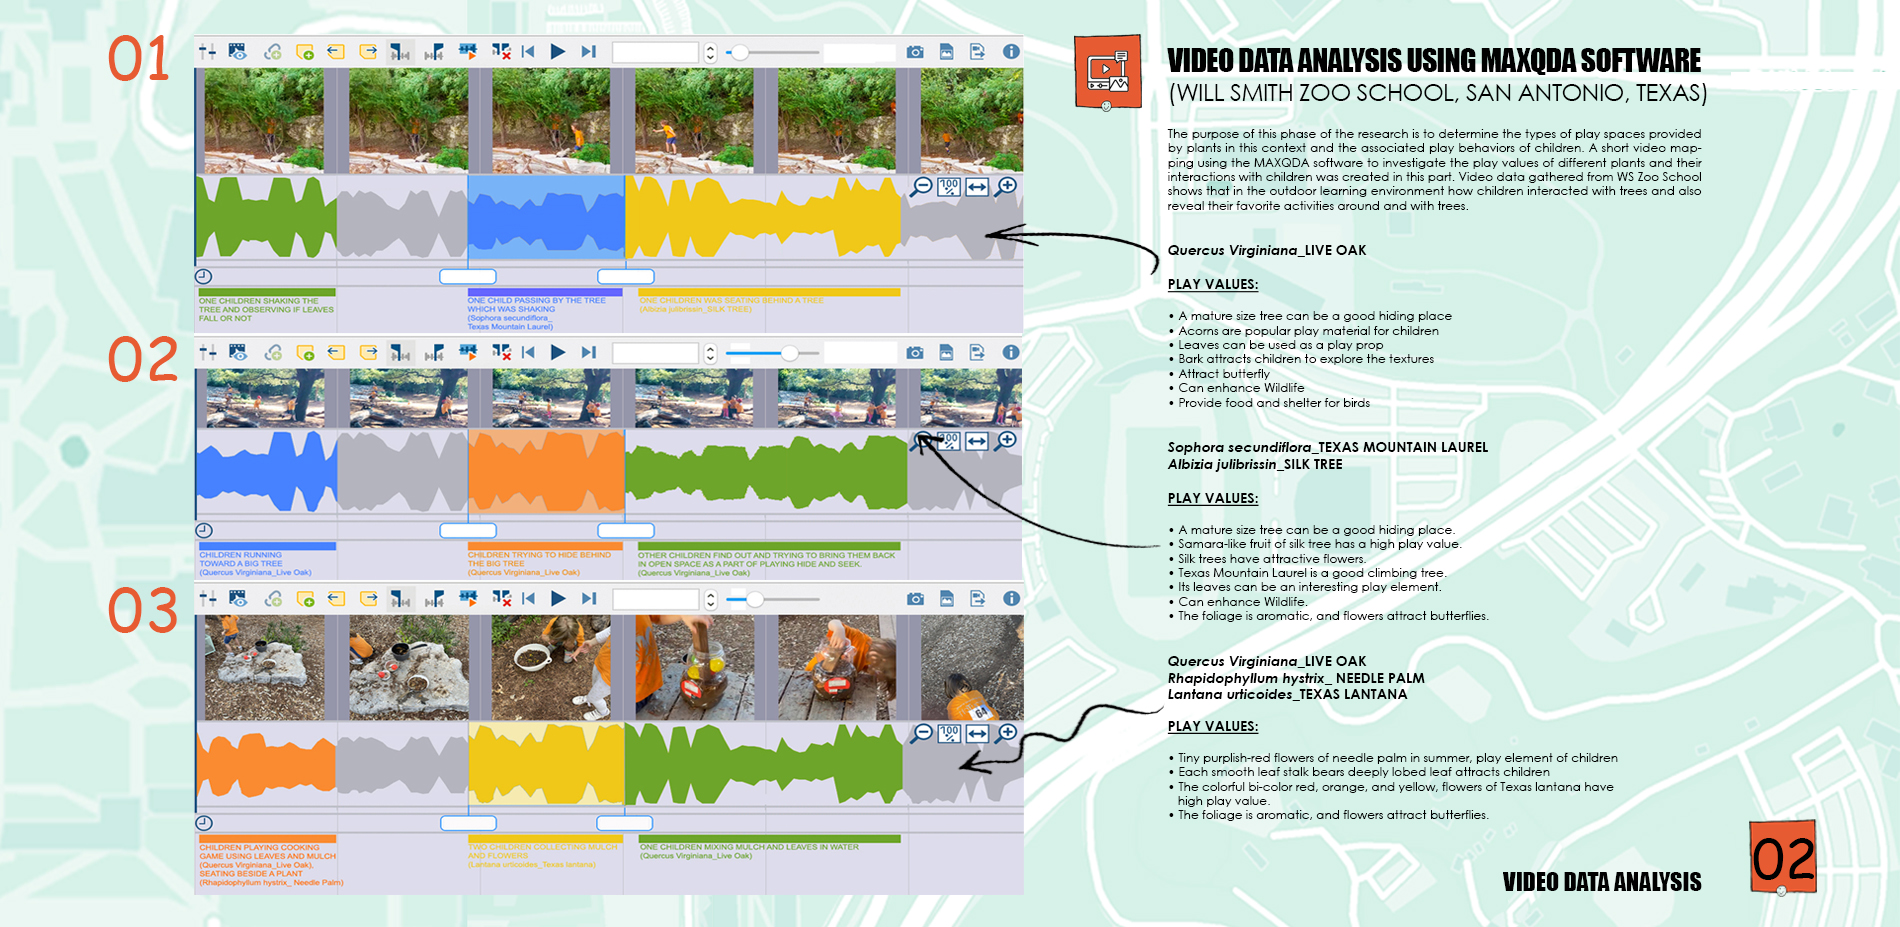 Video Data Analysis of WS Zoo School